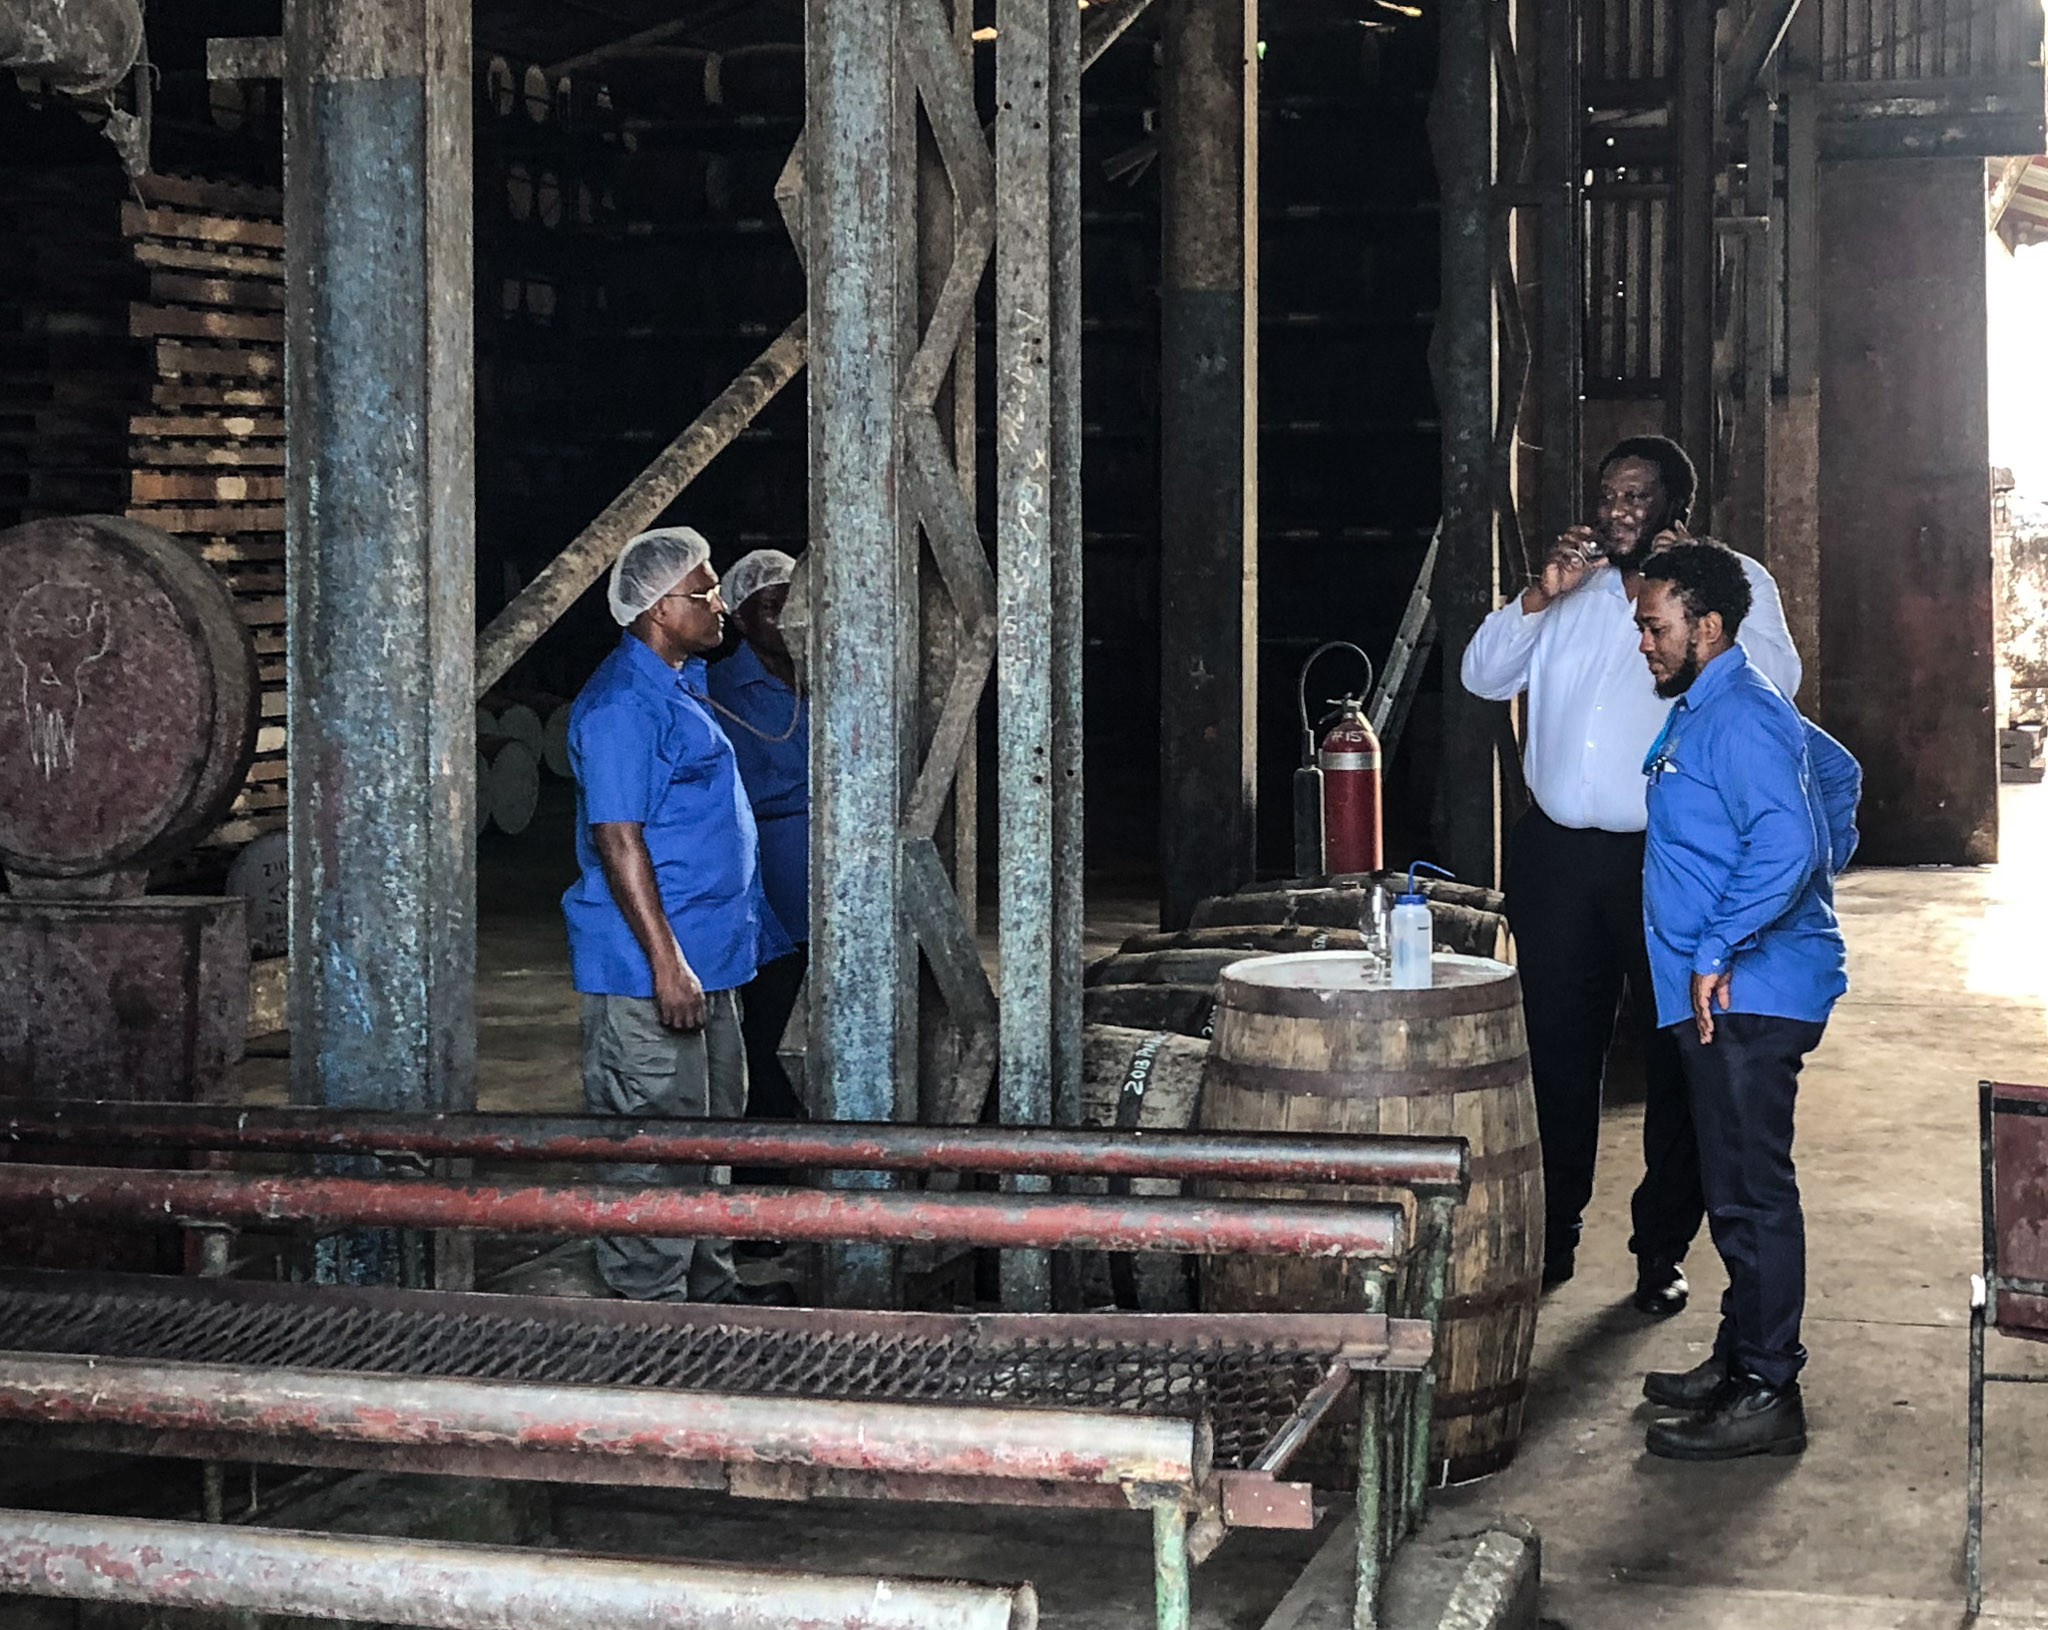 distillery workers gathered around a barrel